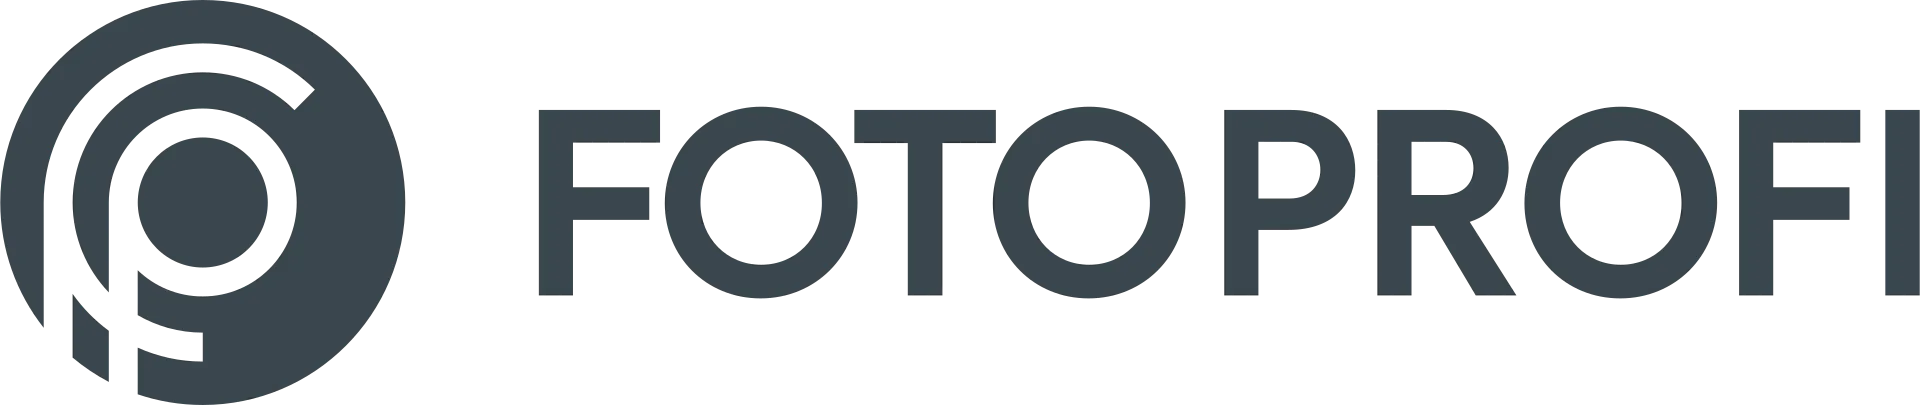 FOTOPROFI logo die aktuell Flugblatt